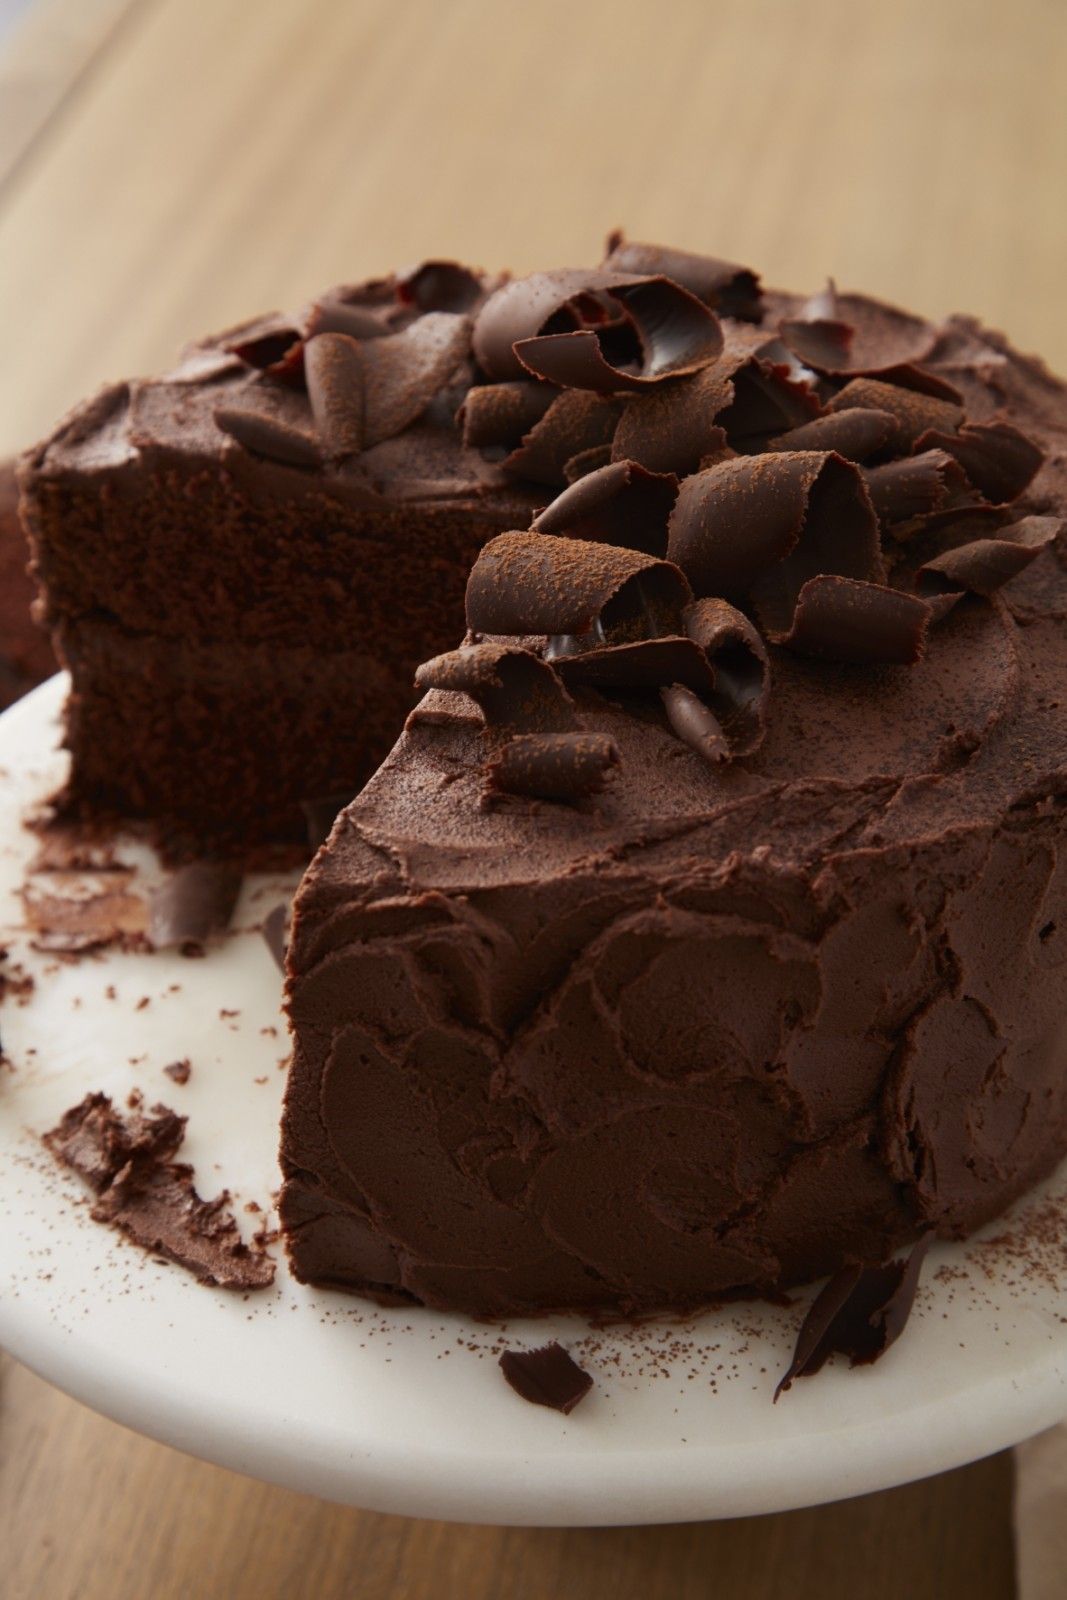 How to Make a Simple Chocolate Cake